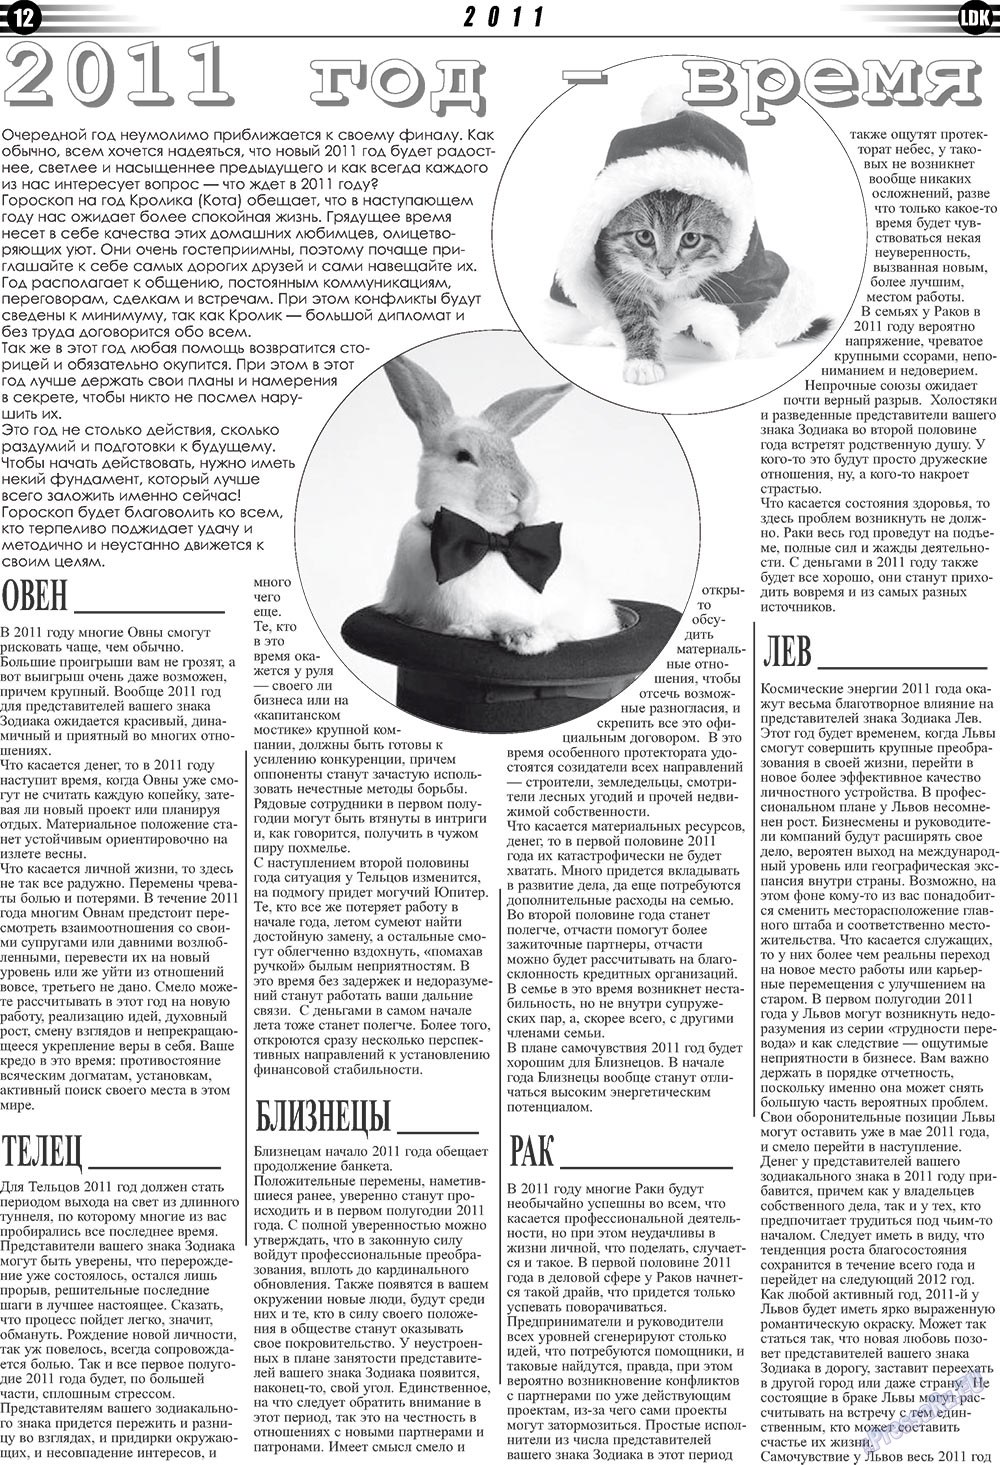 LDK по-русски, газета. 2010 №12 стр.12